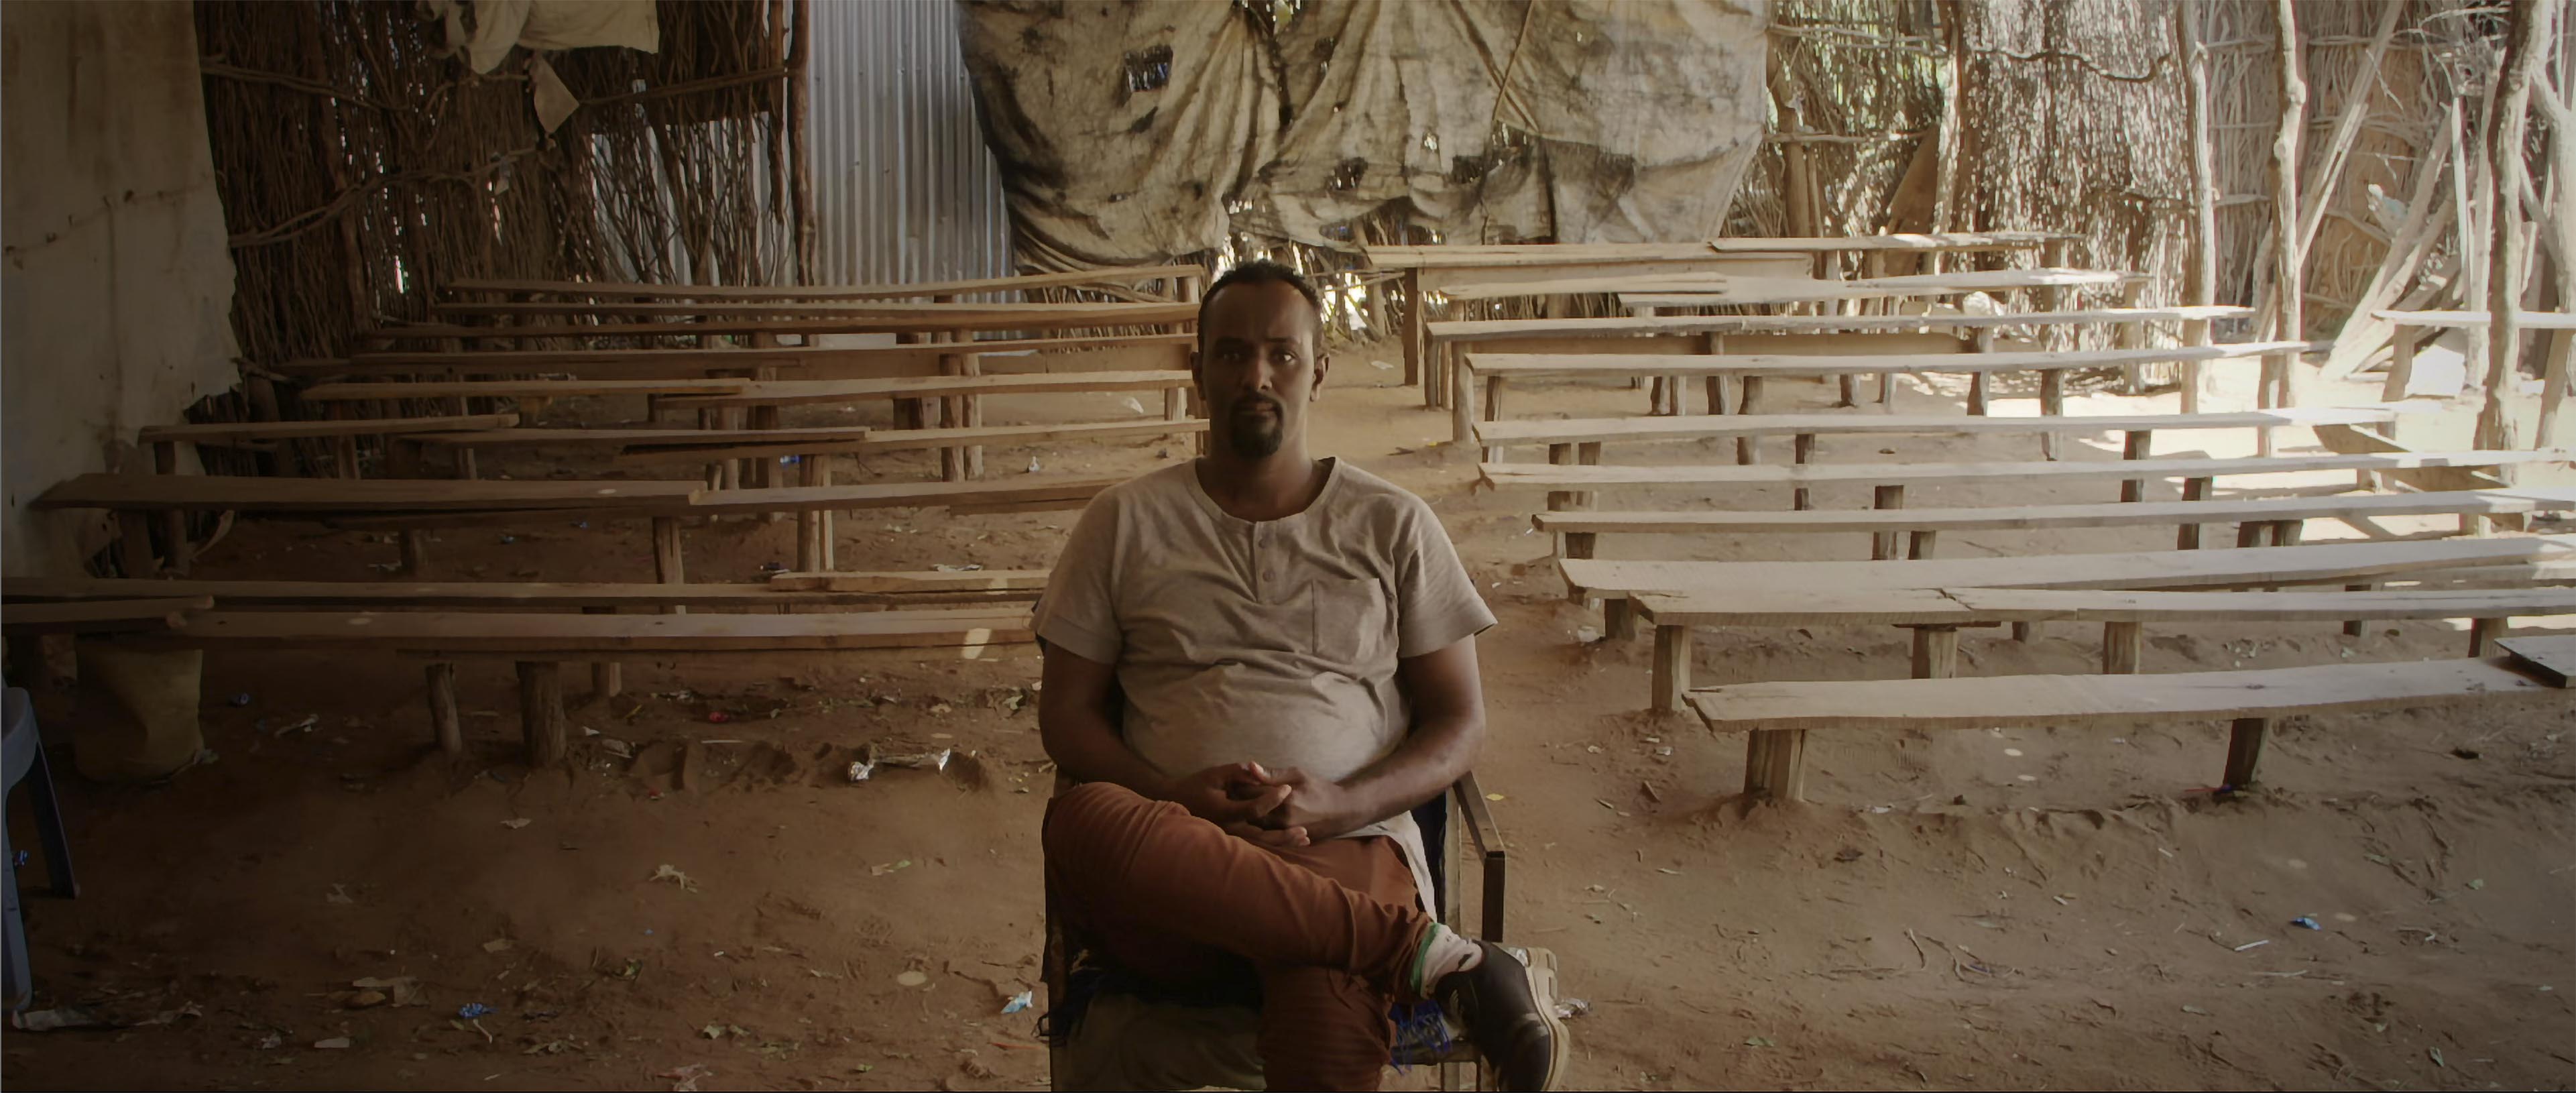 Cinema Dadaab